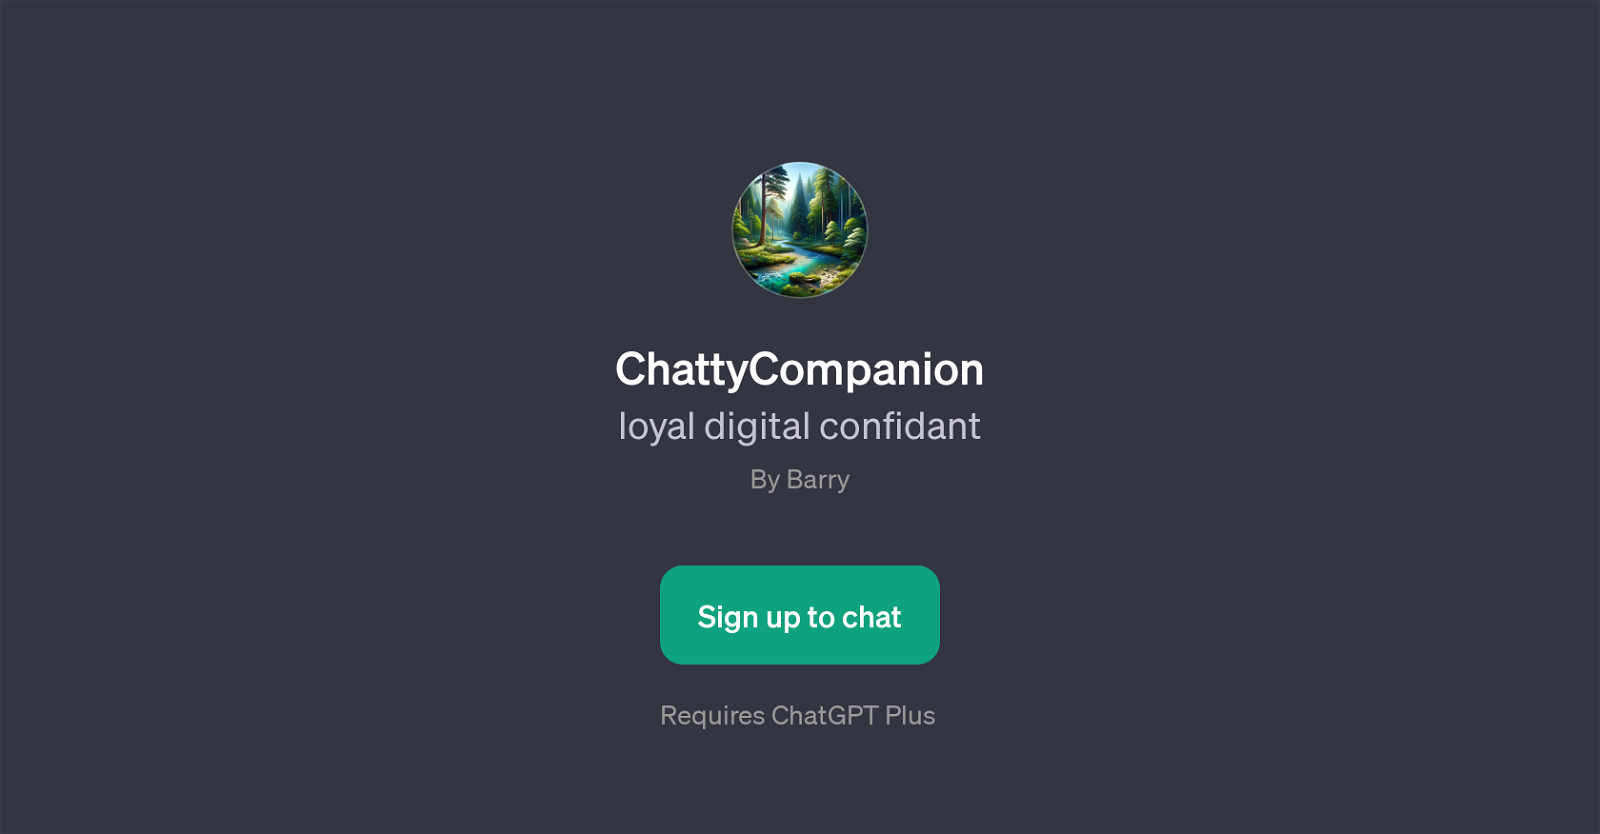 ChattyCompanion website